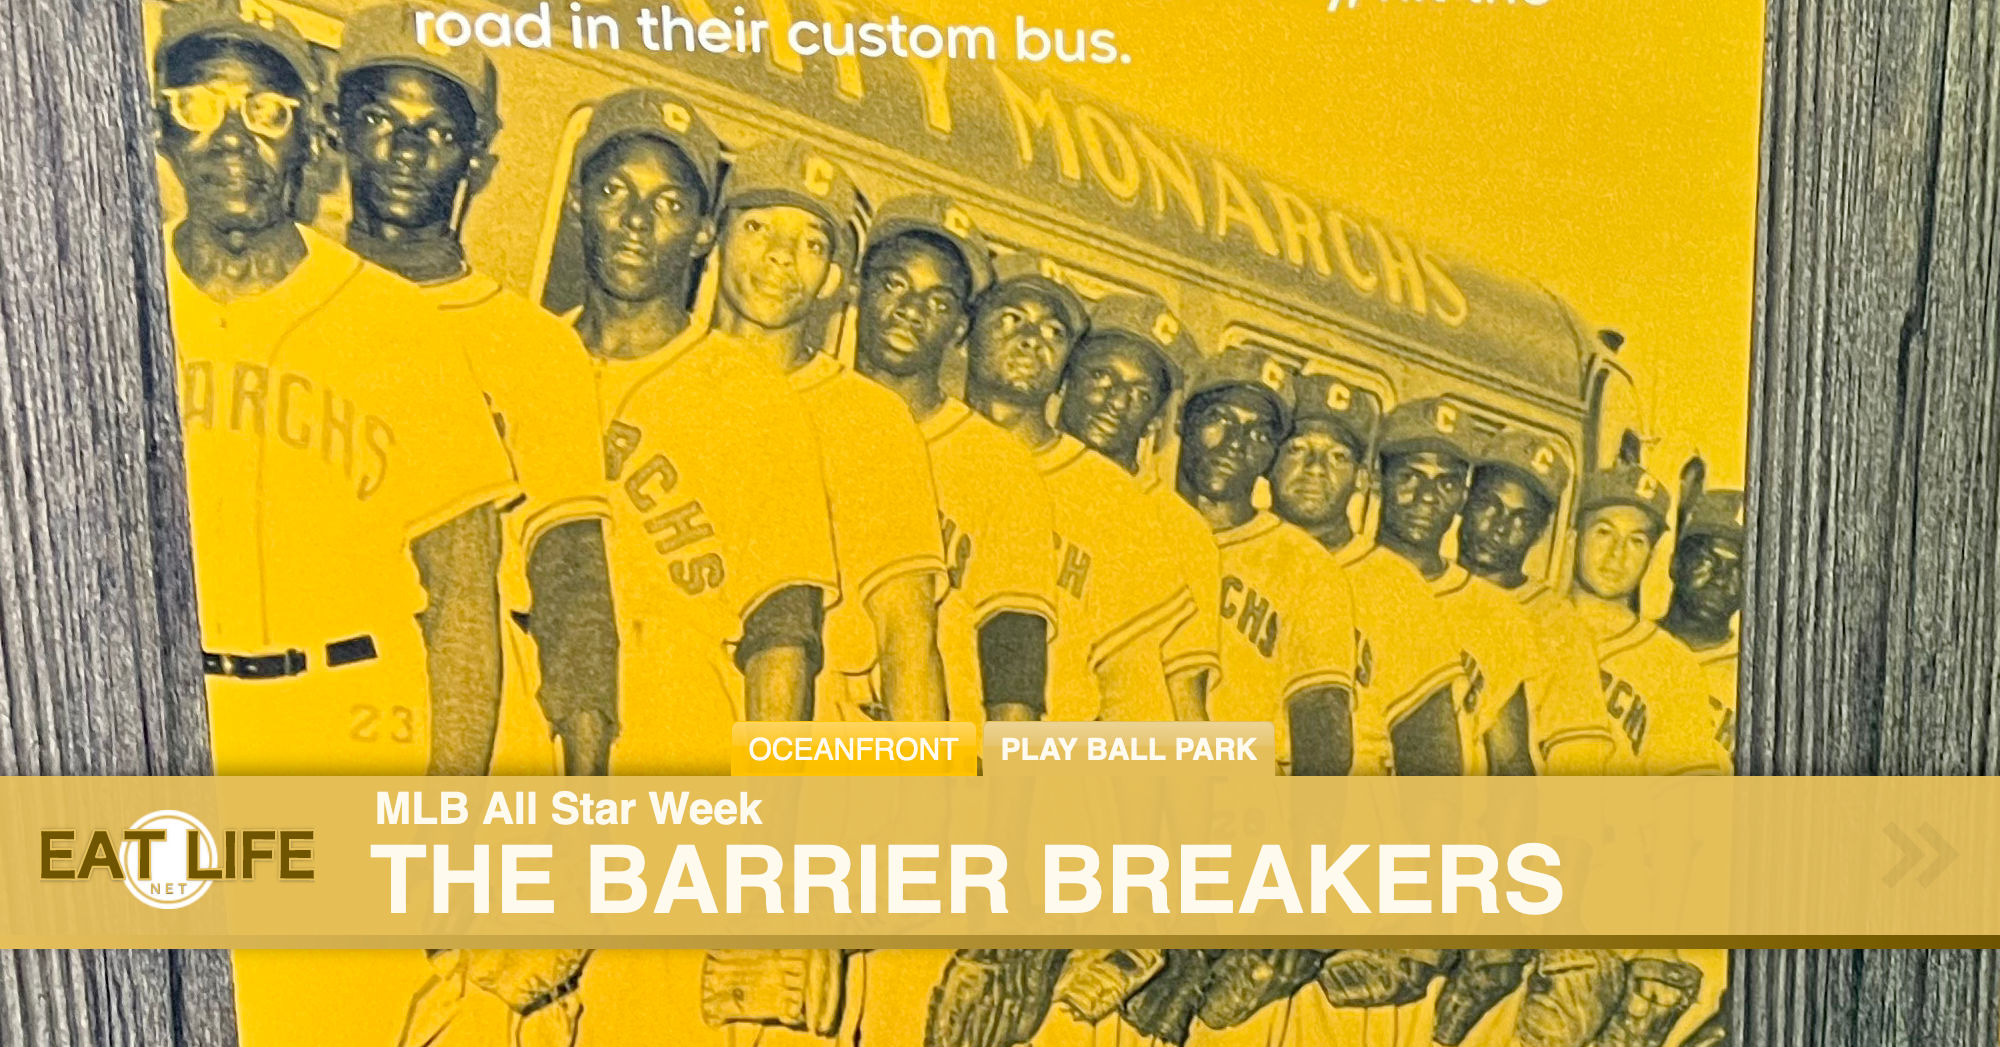 The Barrier Breakers